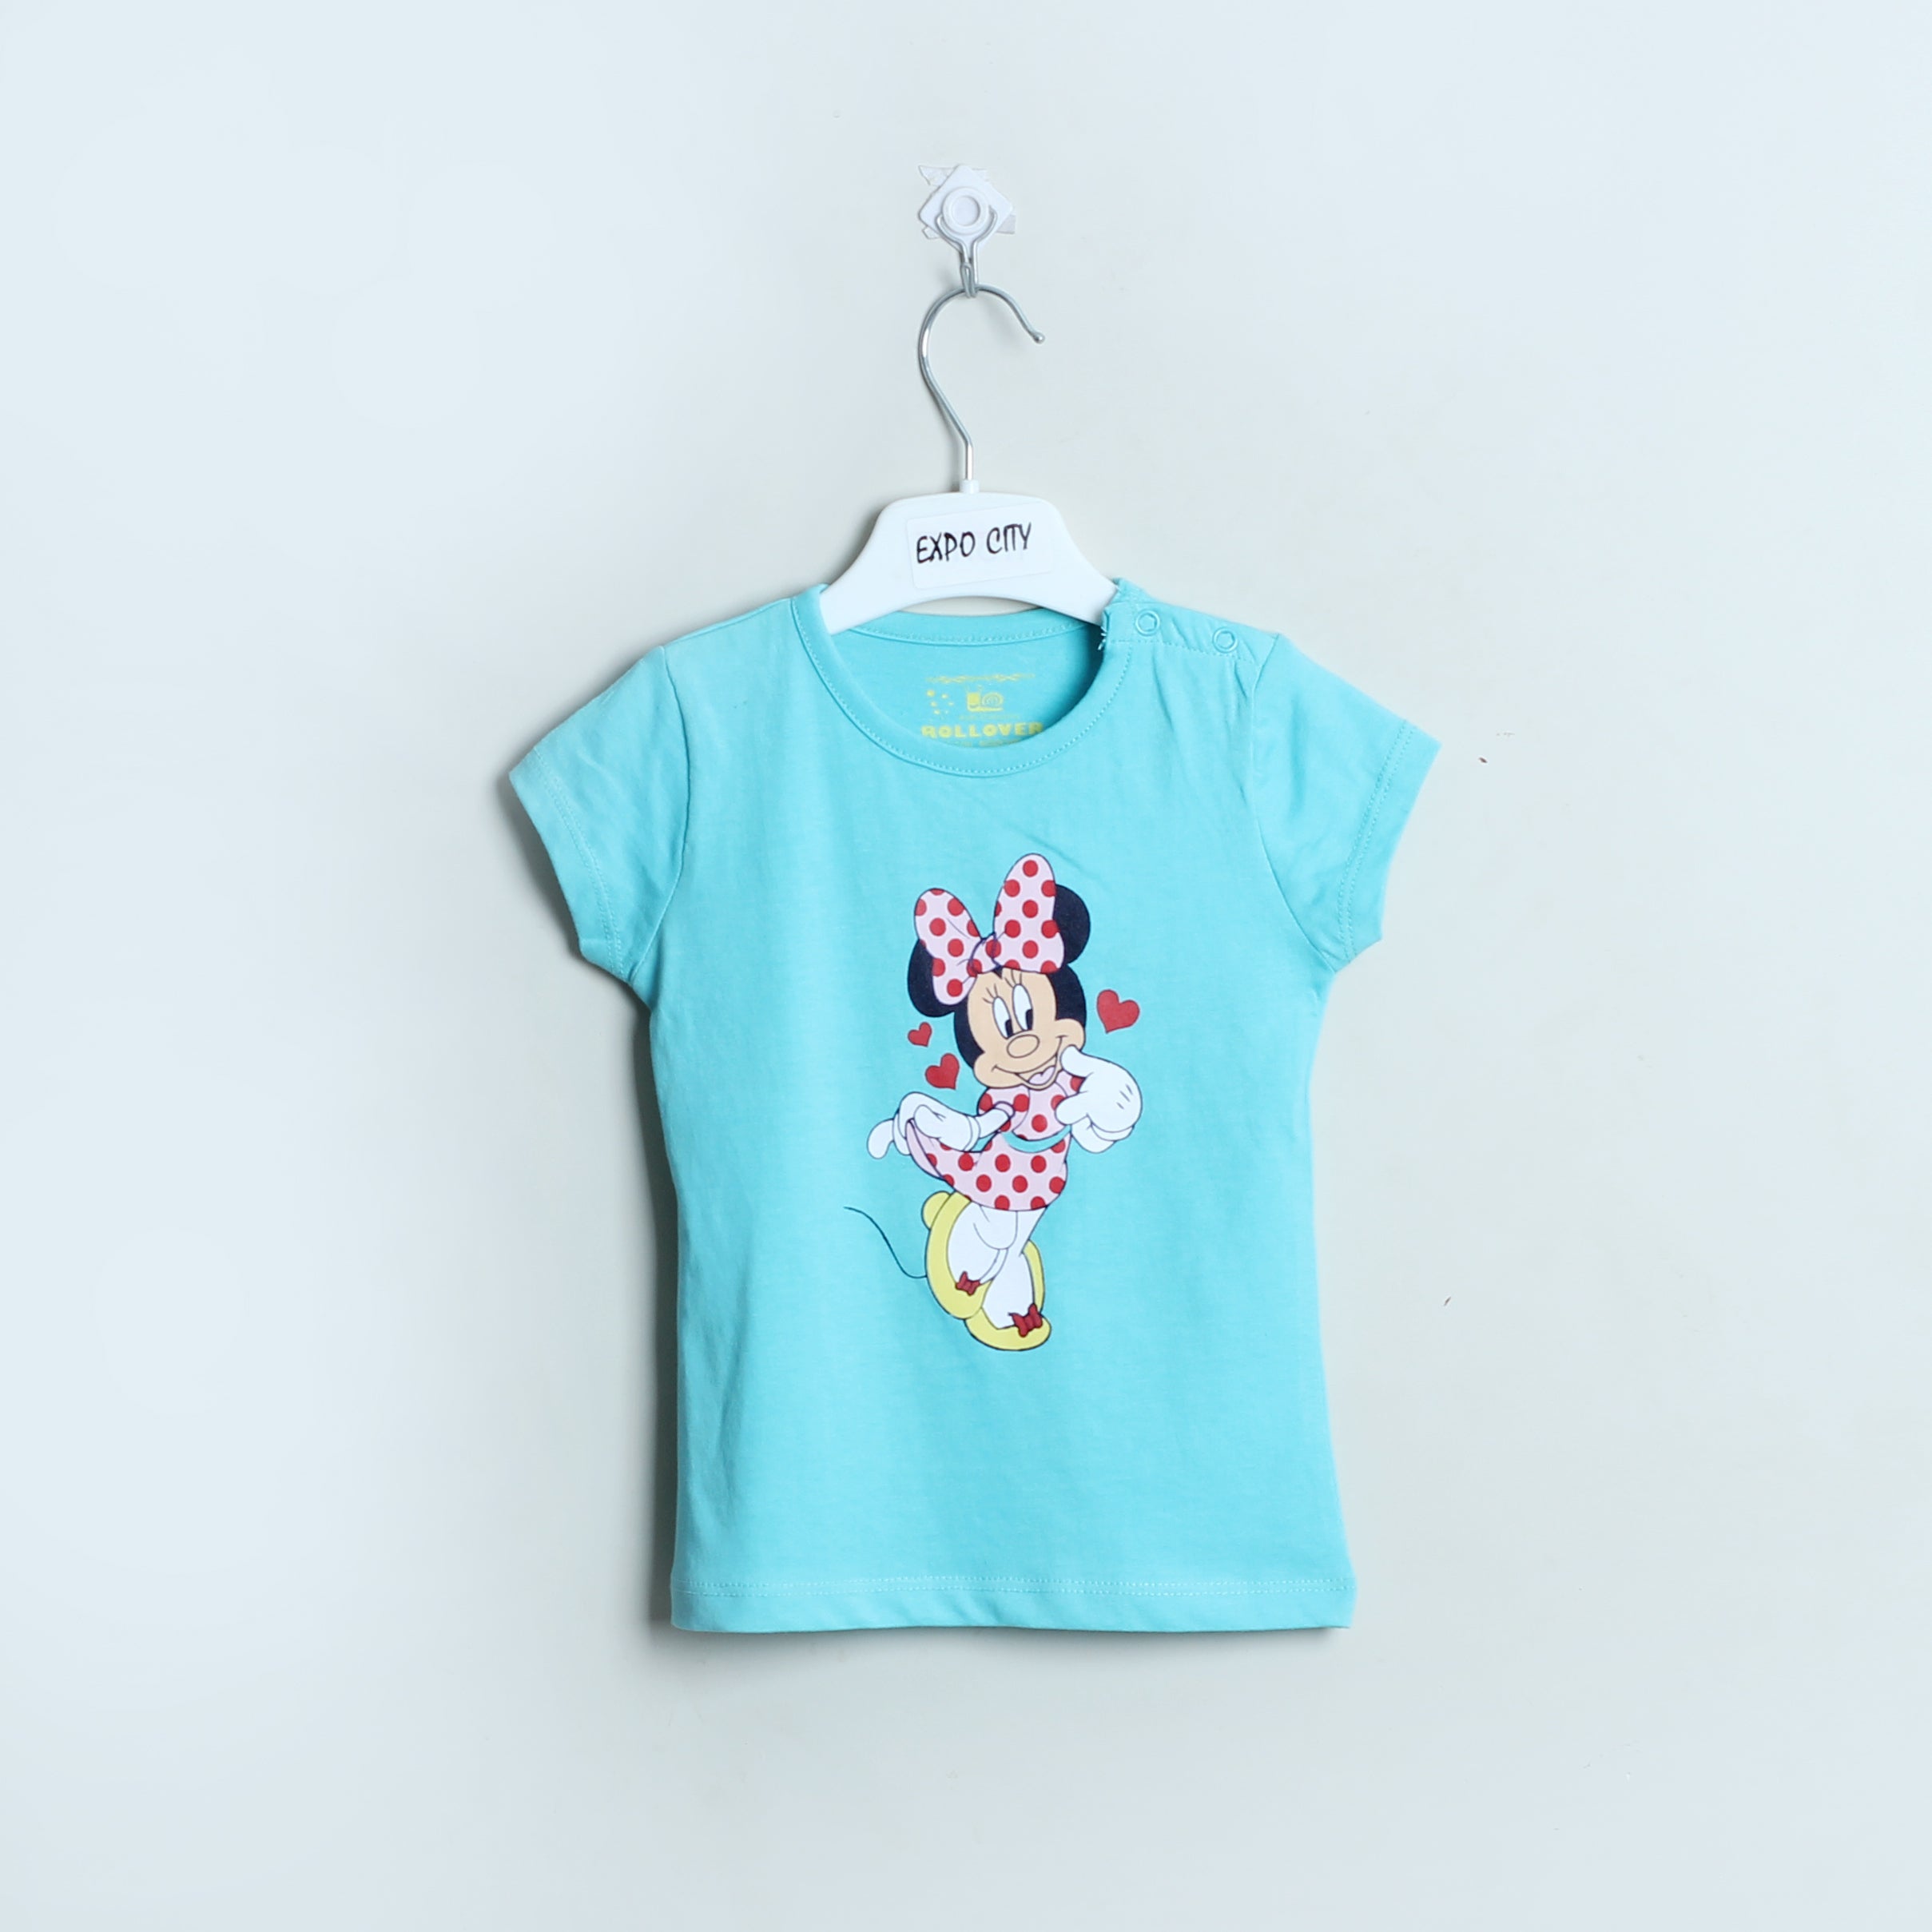 Sky Blue Minnie Mouse Printed Tshirt - Expo City